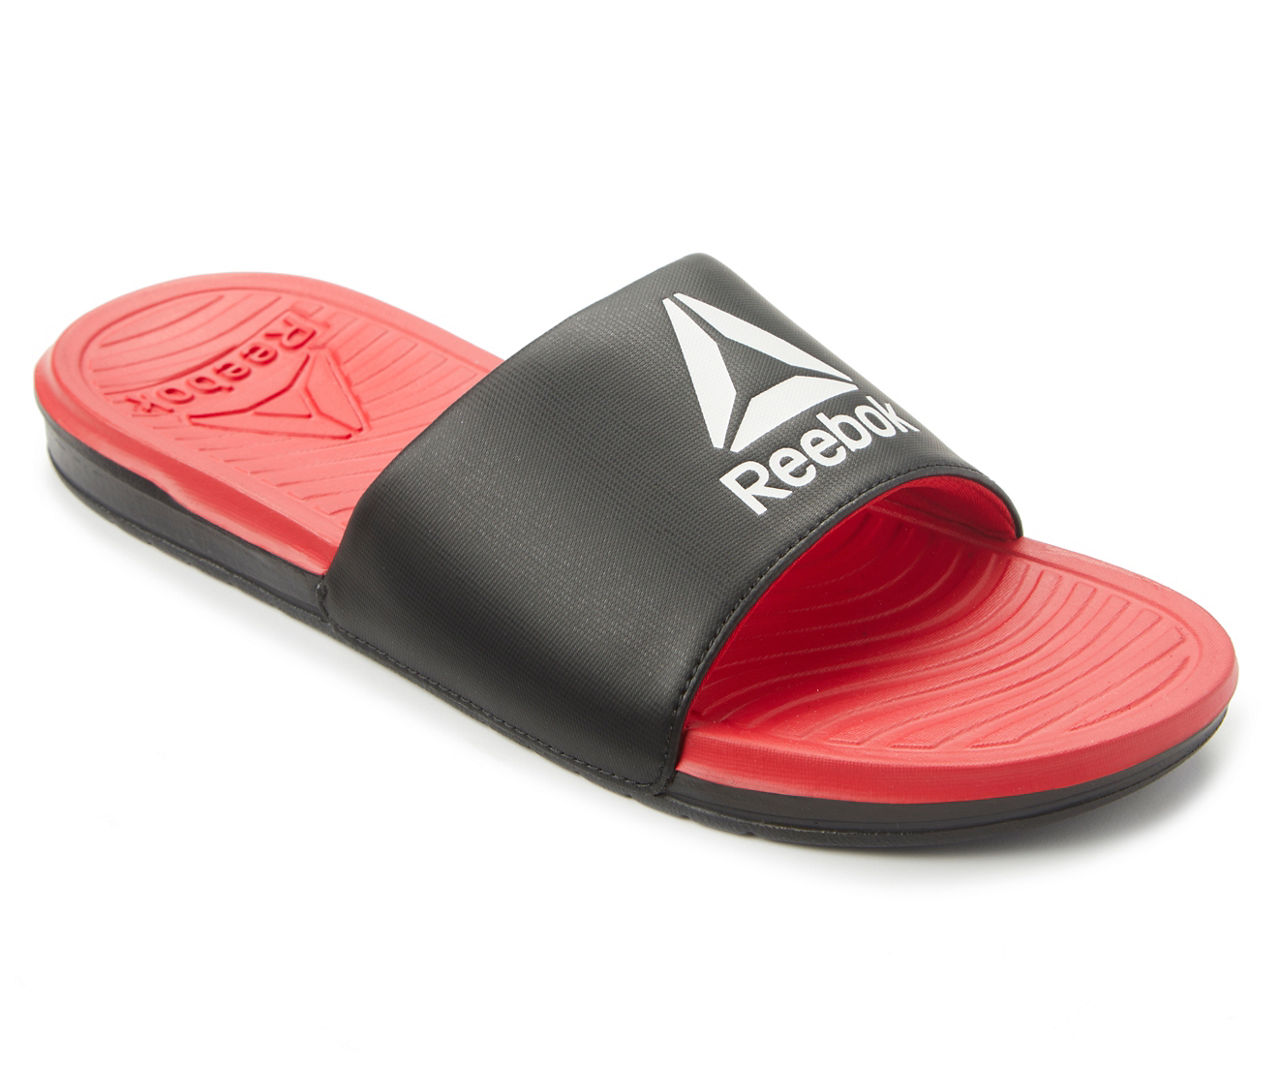 Reebok Men's Red Slide Sandals | Lots